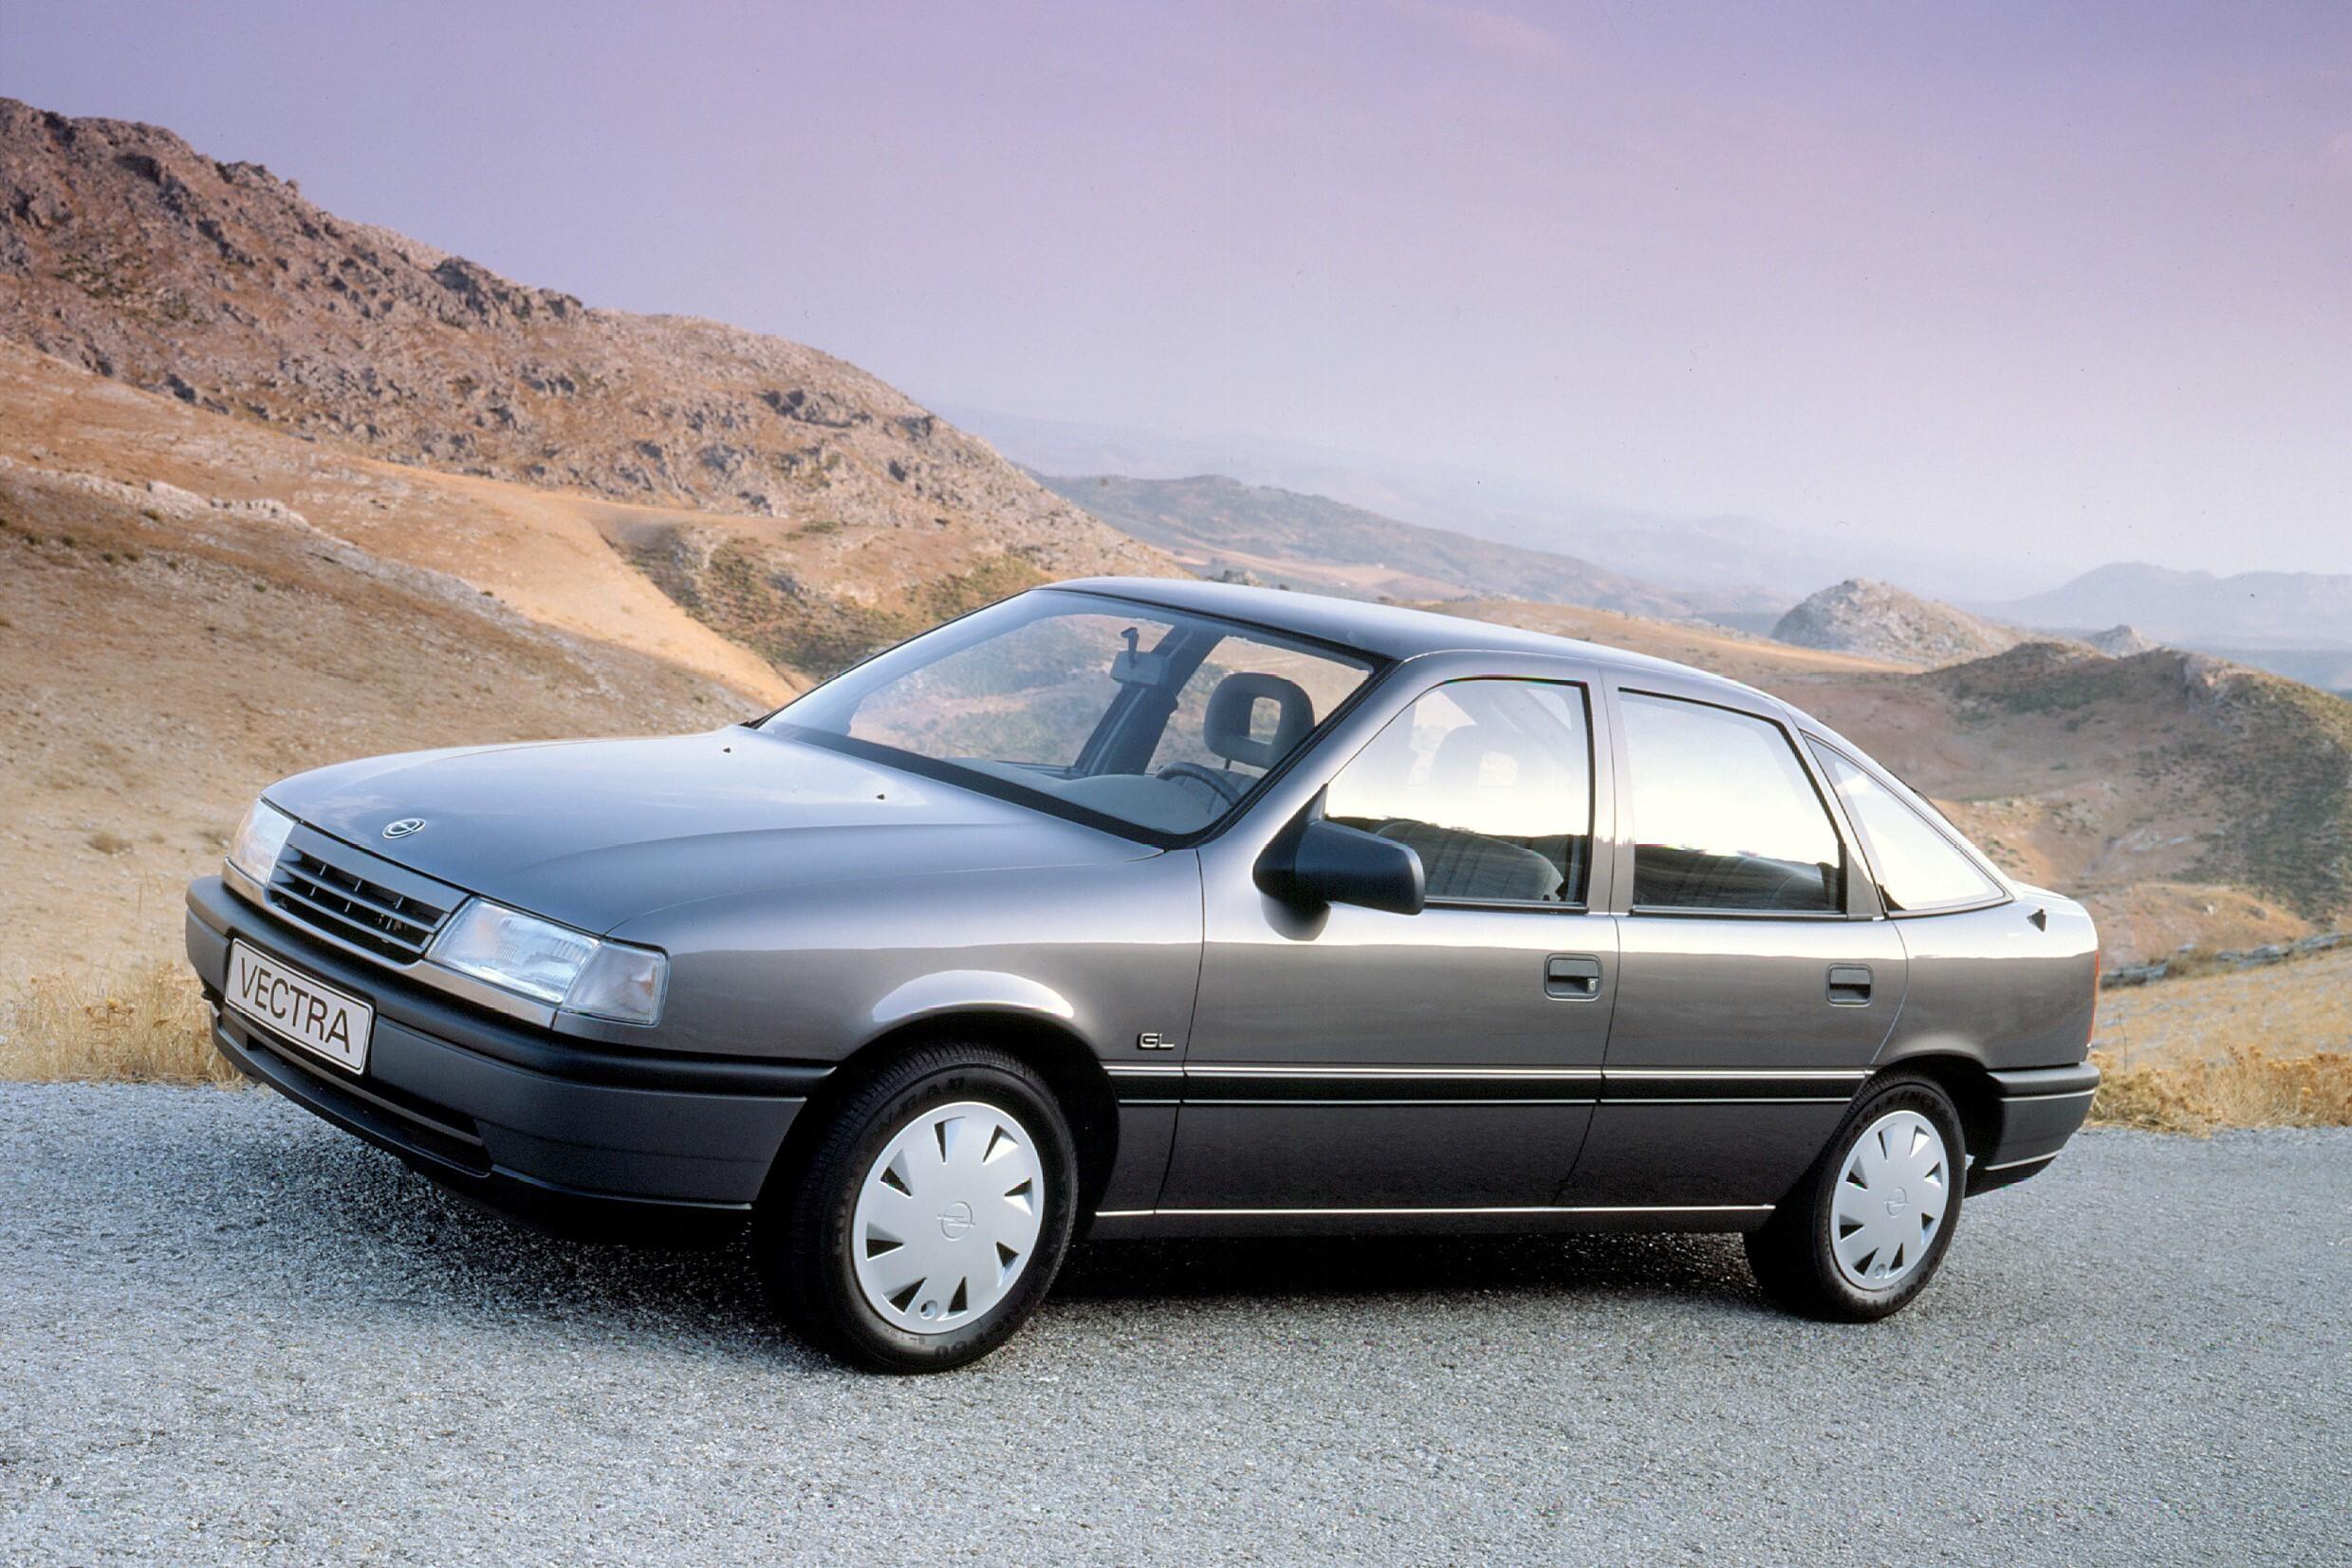 Автомобиль вектра б. Opel Vectra. Opel Vectra 1989. Опель Вектра 1995. Опель Вектра 1988 хэтчбек.